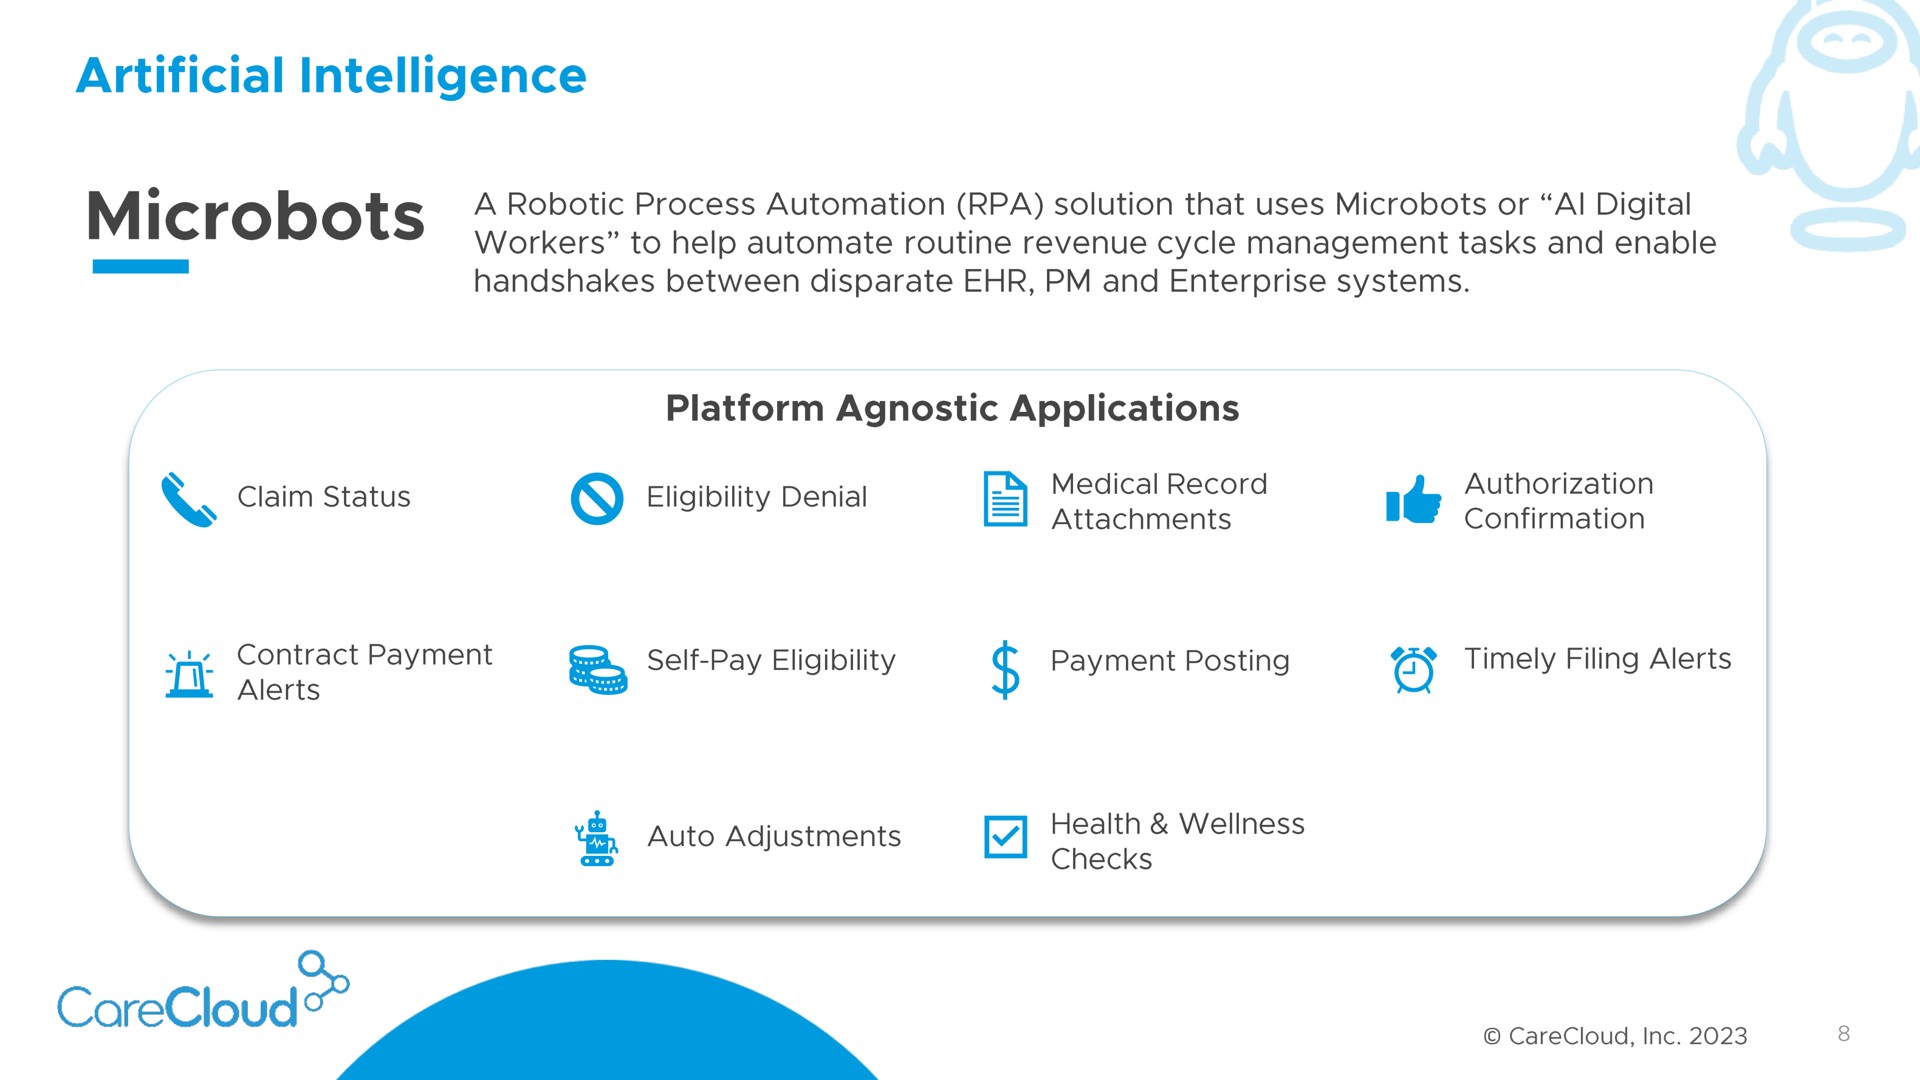 artificial intelligence platform agnostic applications | CareCloud